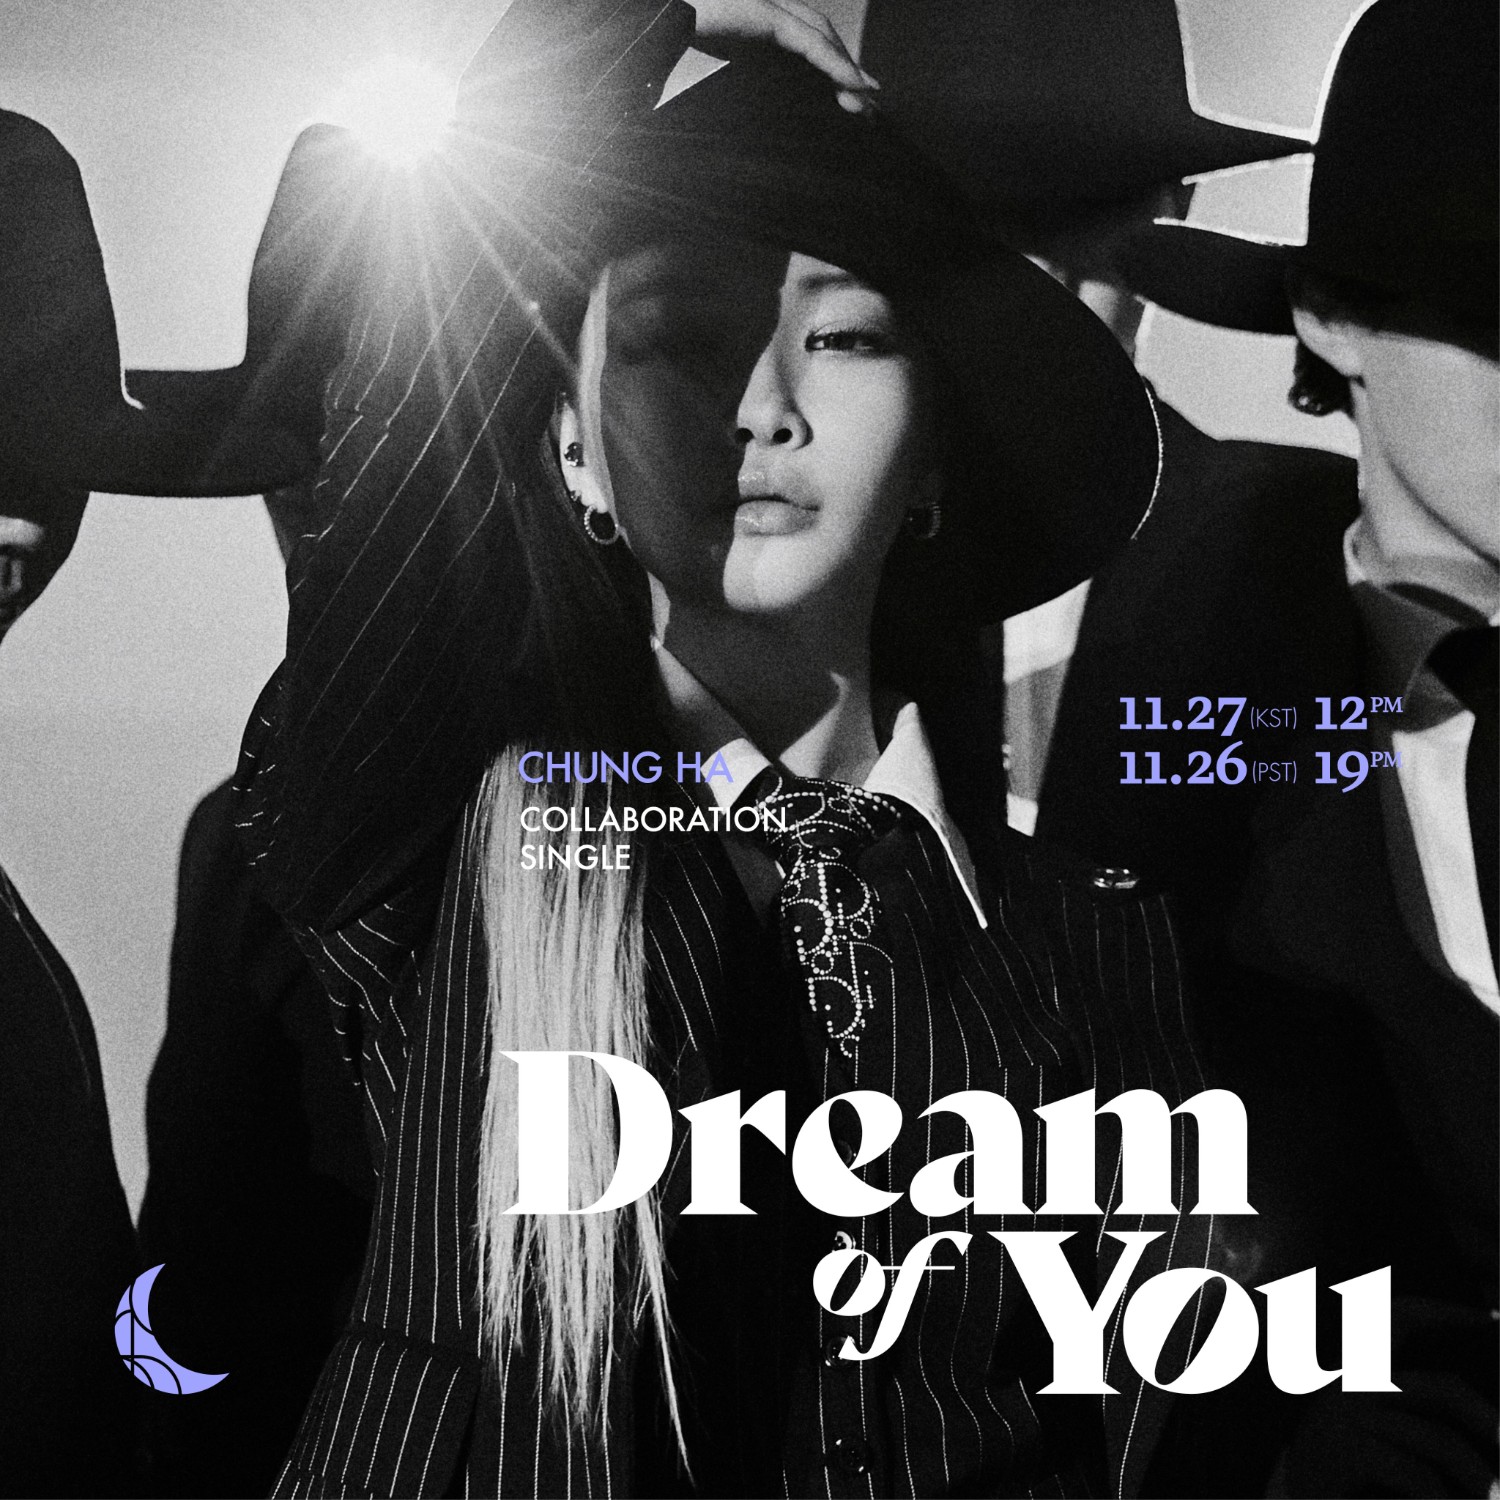 [KPOP] CHUNG HA (청하) COLLABORATION SINGLE [Dream of You] PHOTO TEASER